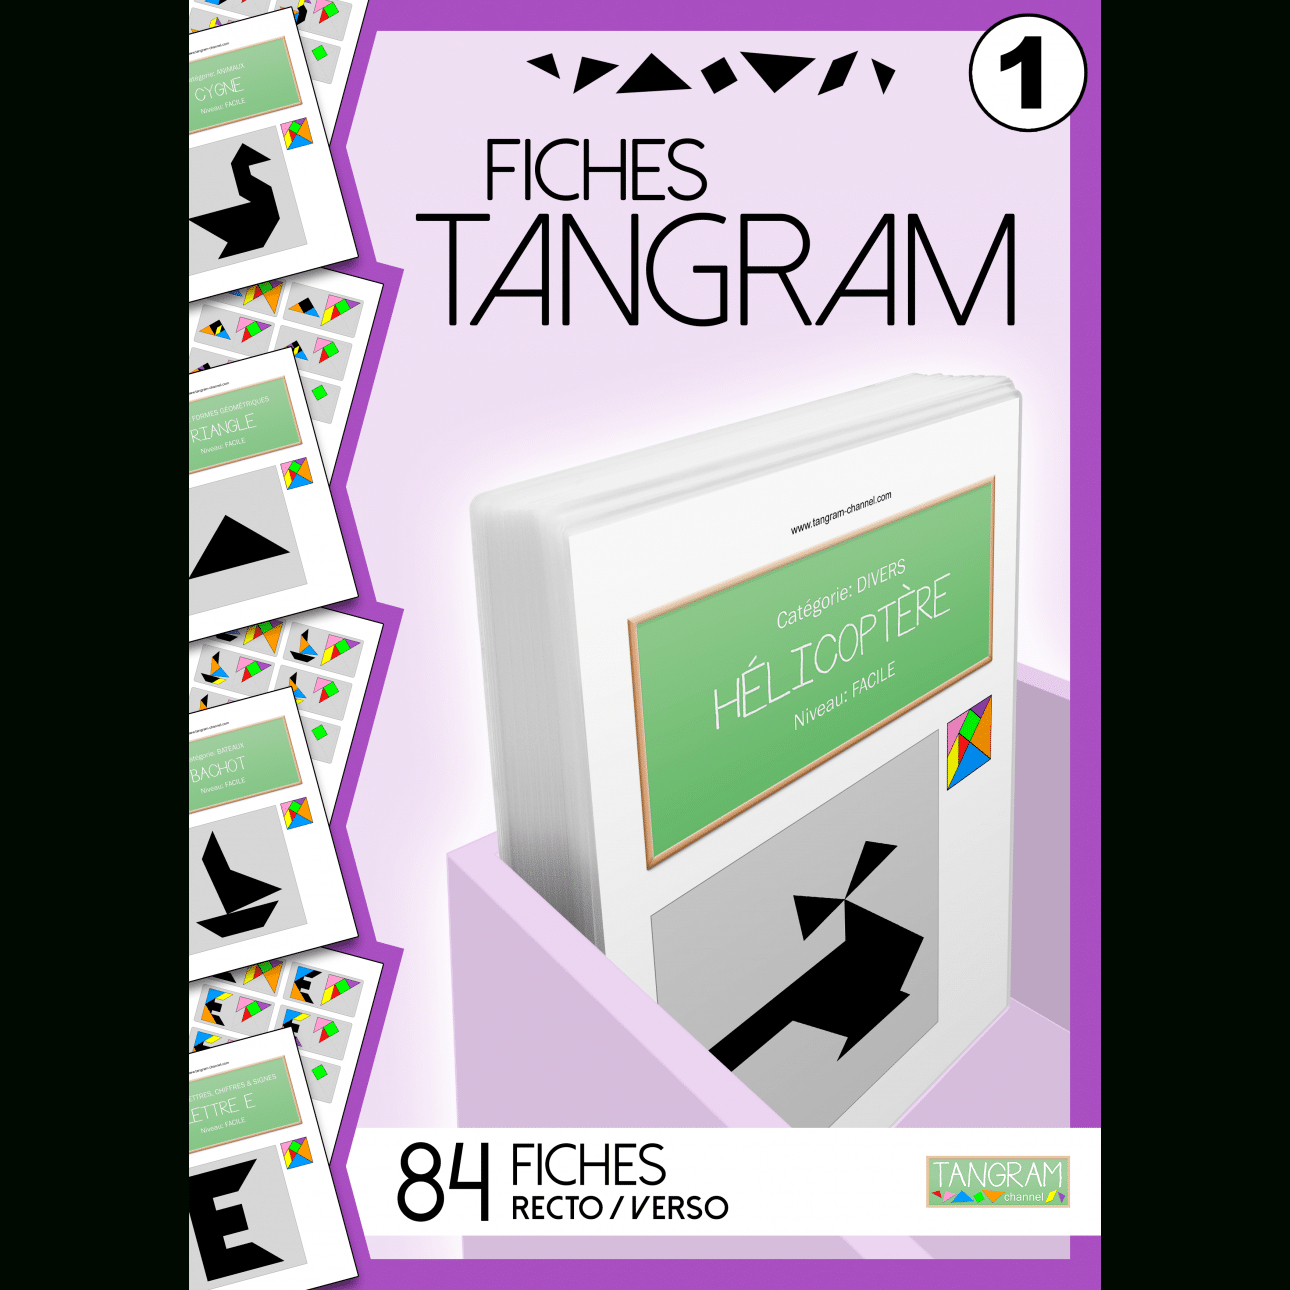 Fiches Tangram Vol.1 - 84 Fiches Recto/verso concernant Tangram A Imprimer 